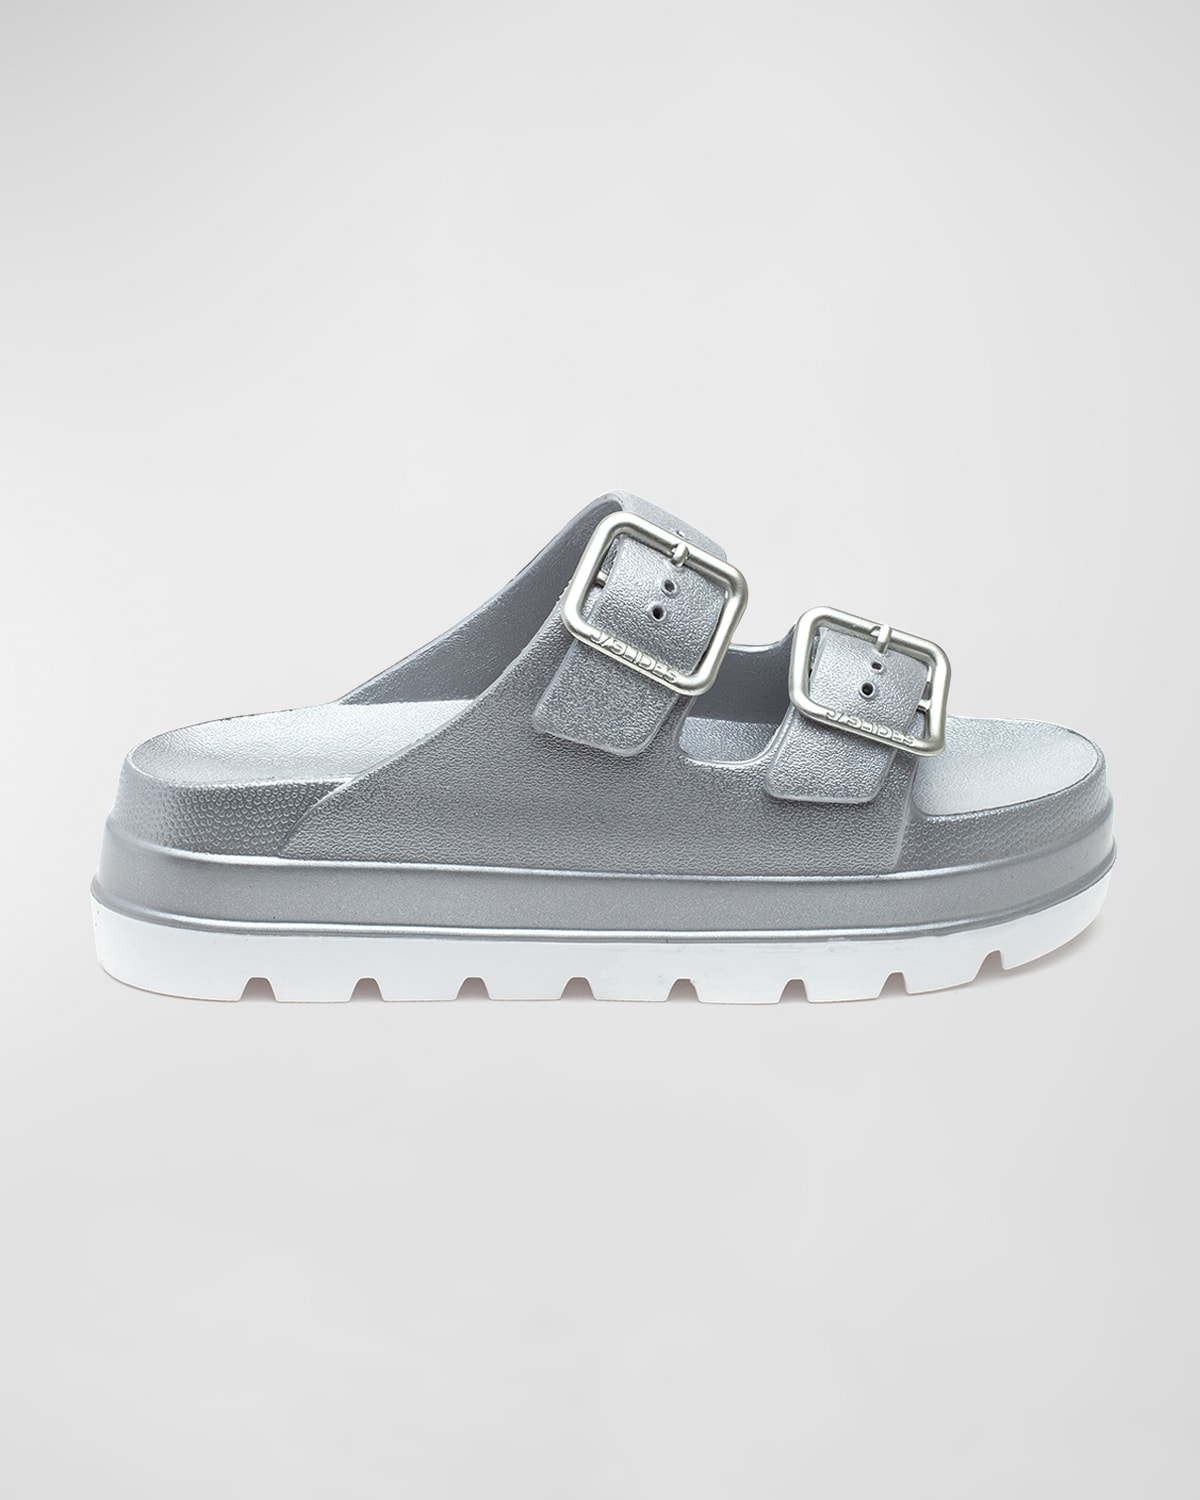 JSlides Simply B Dual-Buckle Slide Sandals